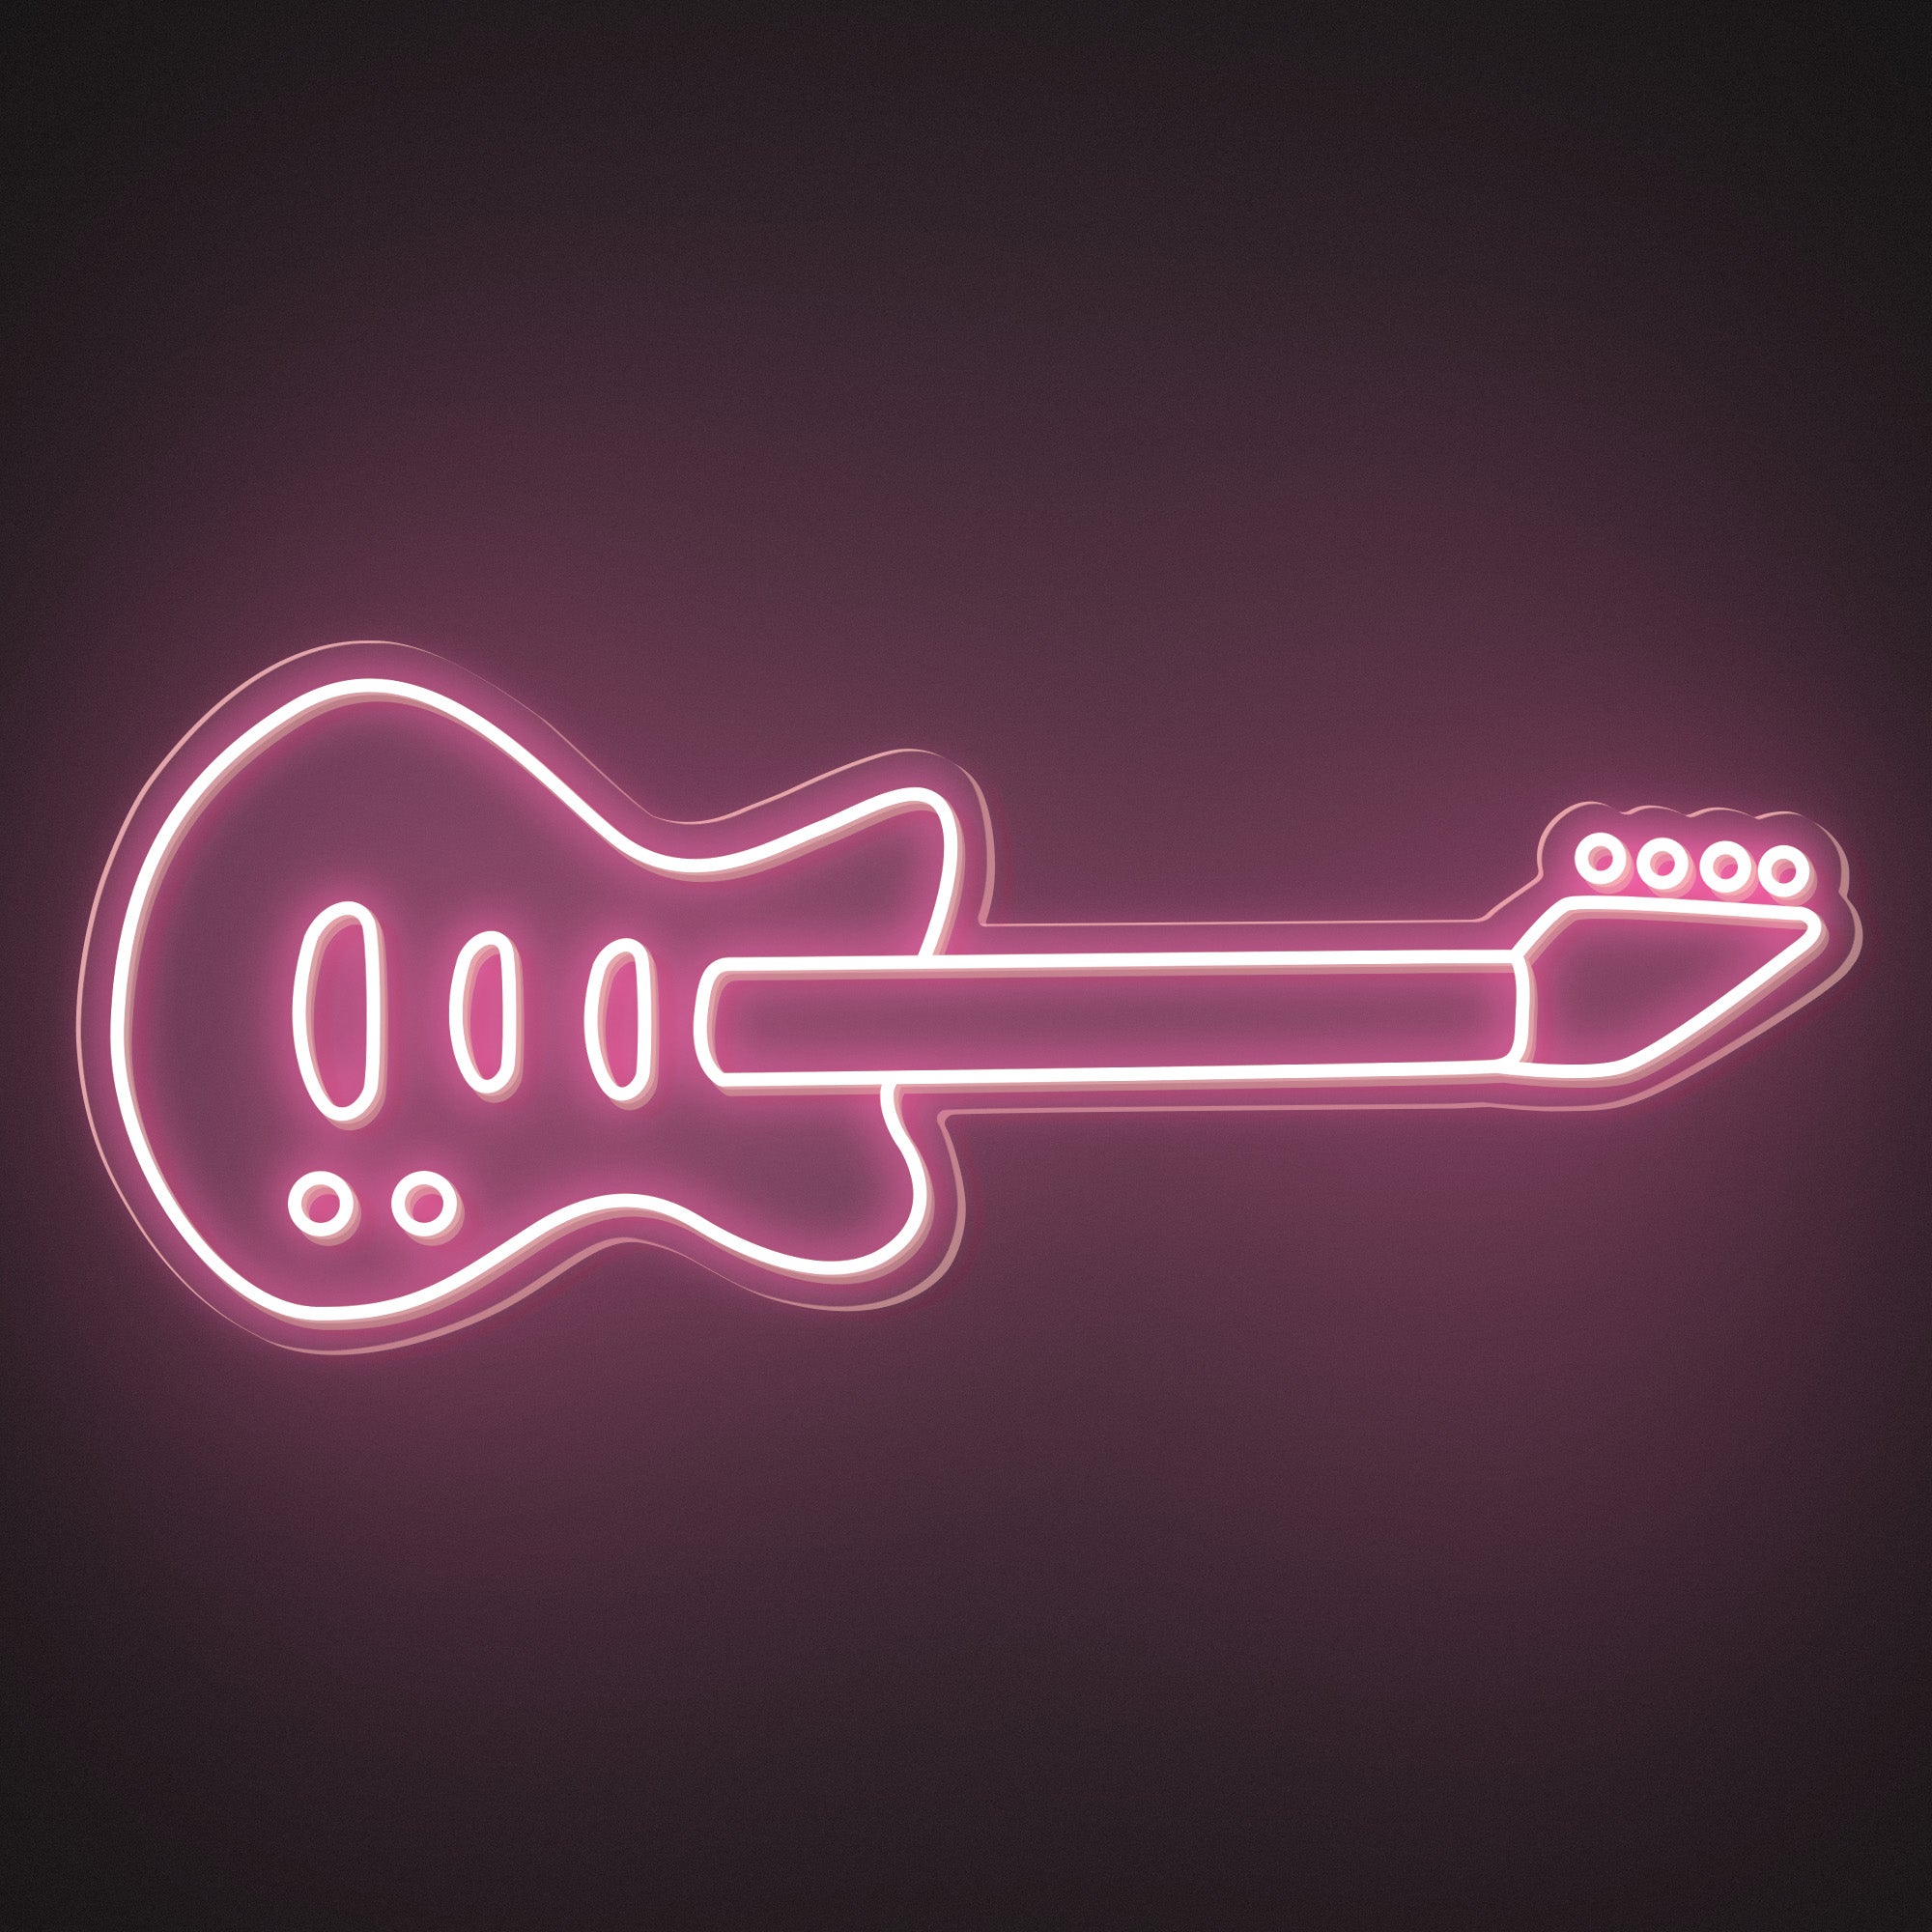 Guitar Music Neon Sign